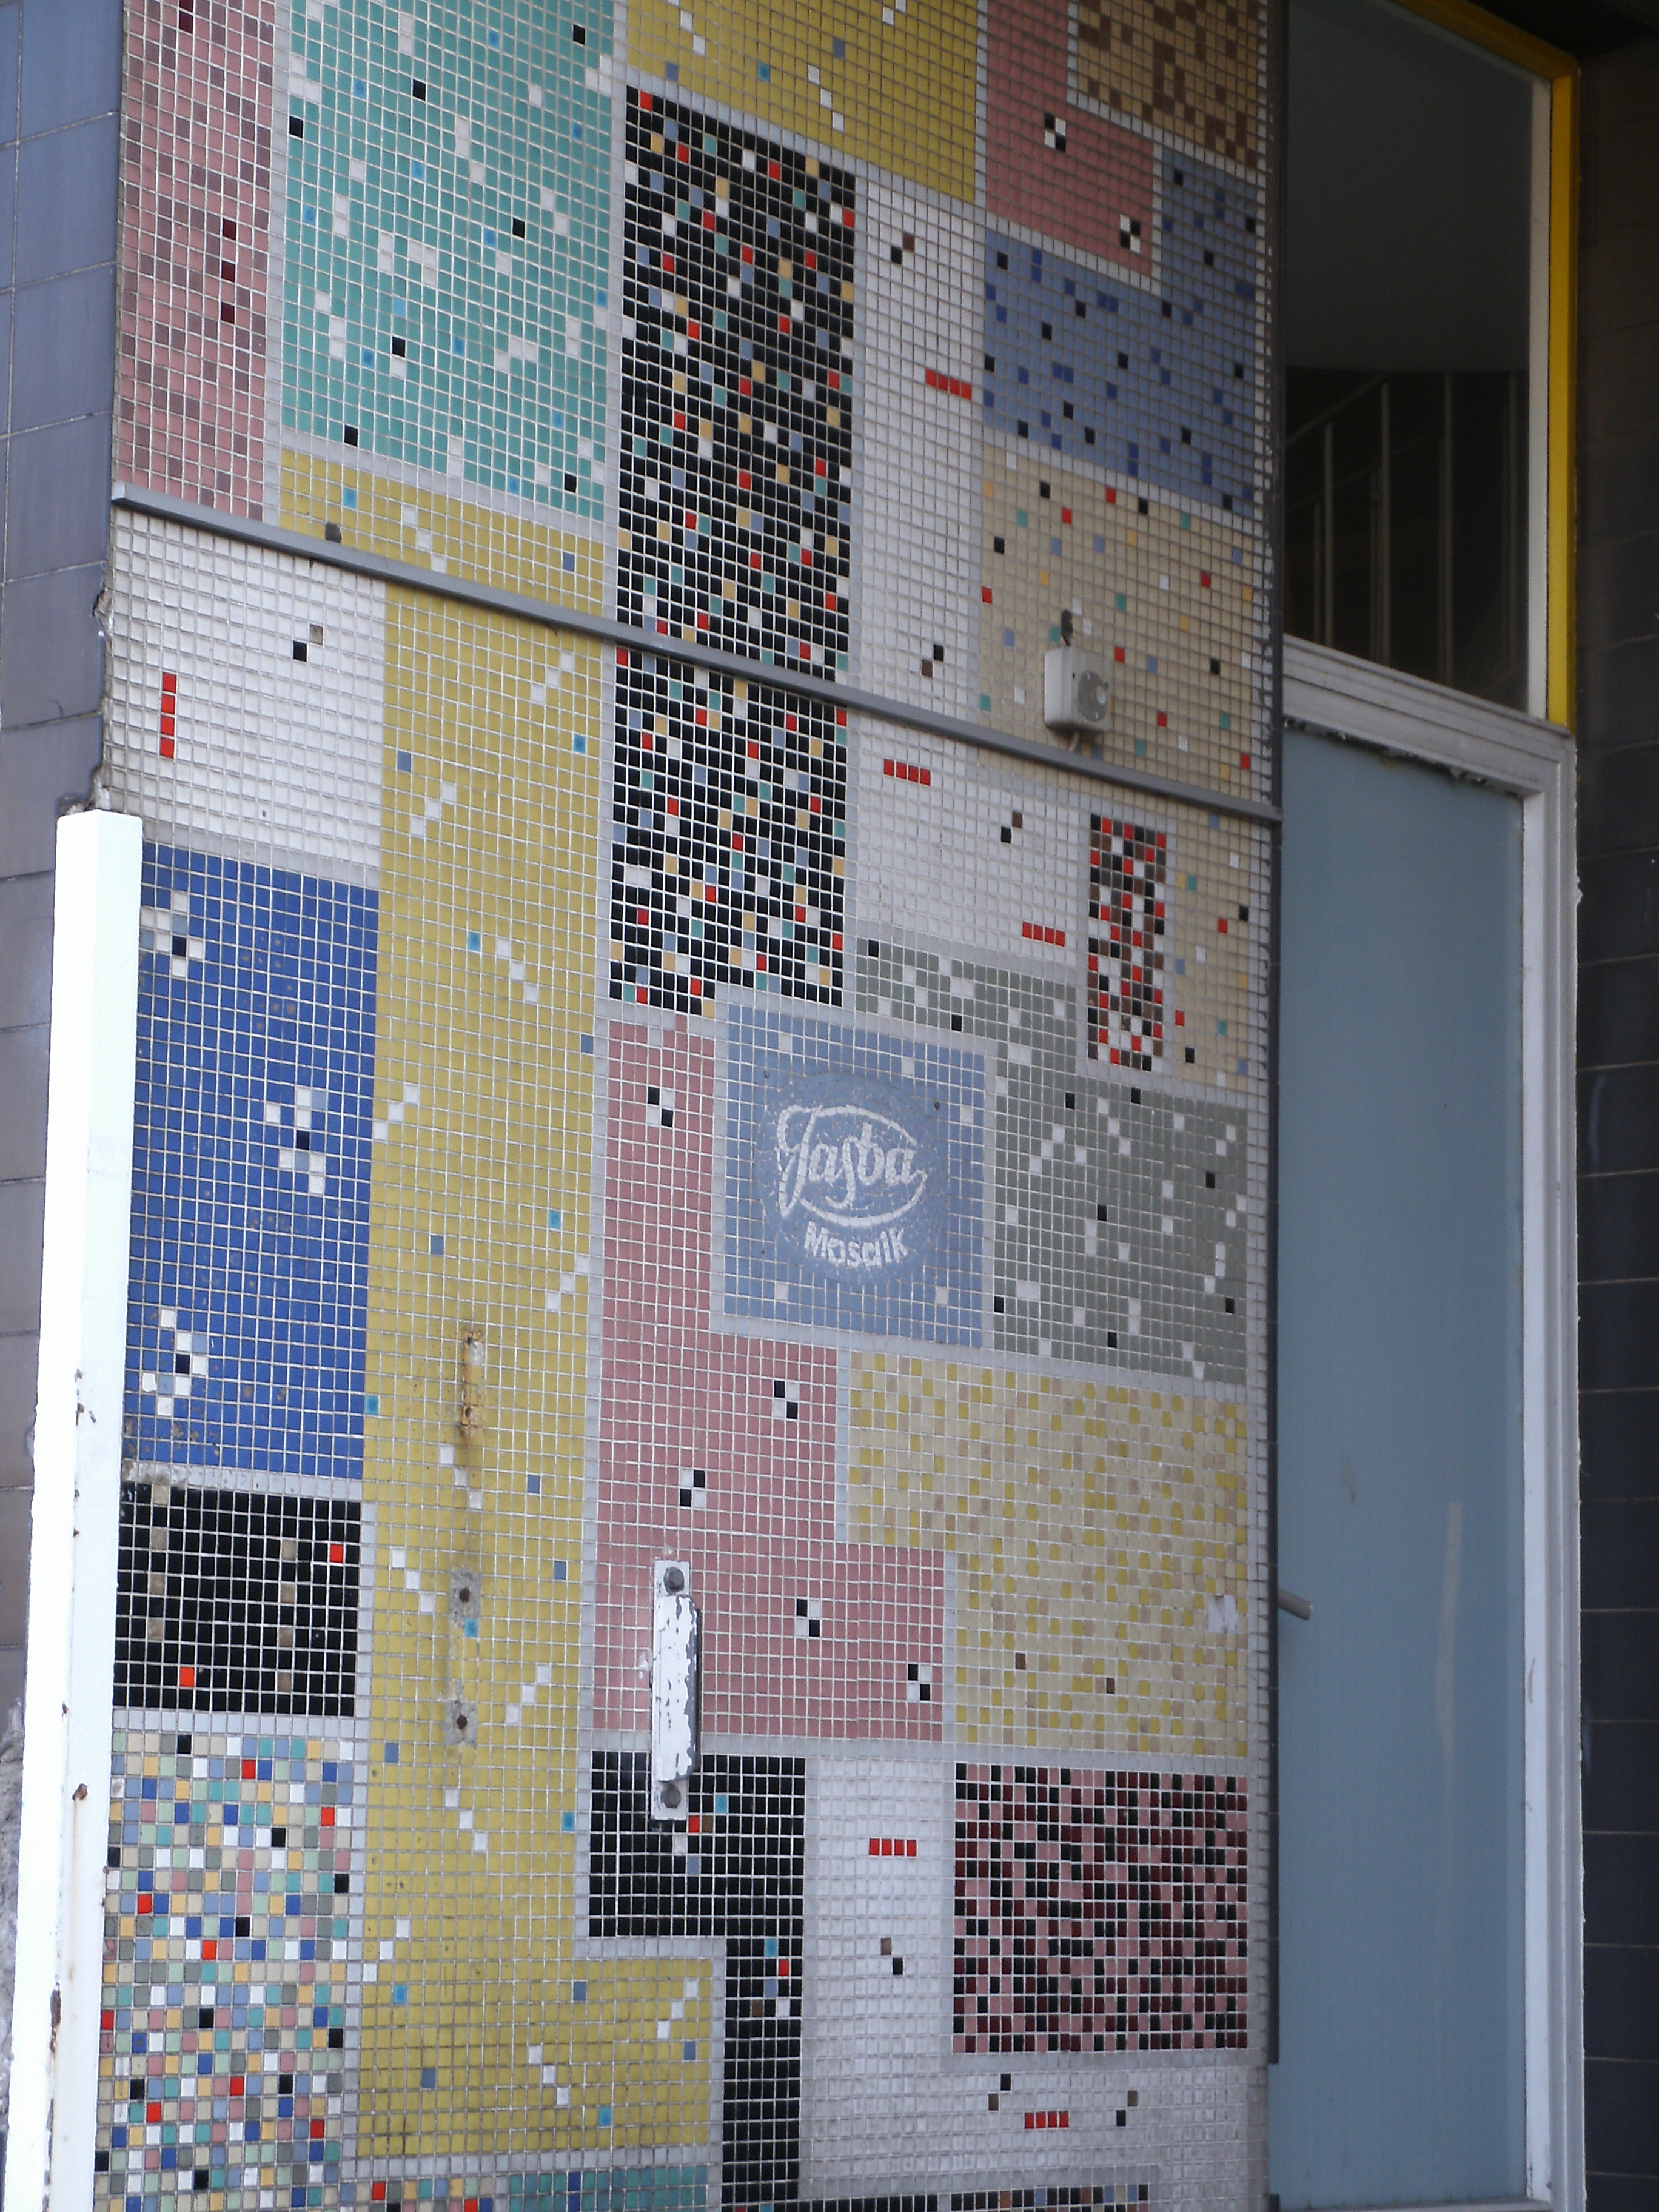 Jasba Mosaic Tiles - Bochum, Germany